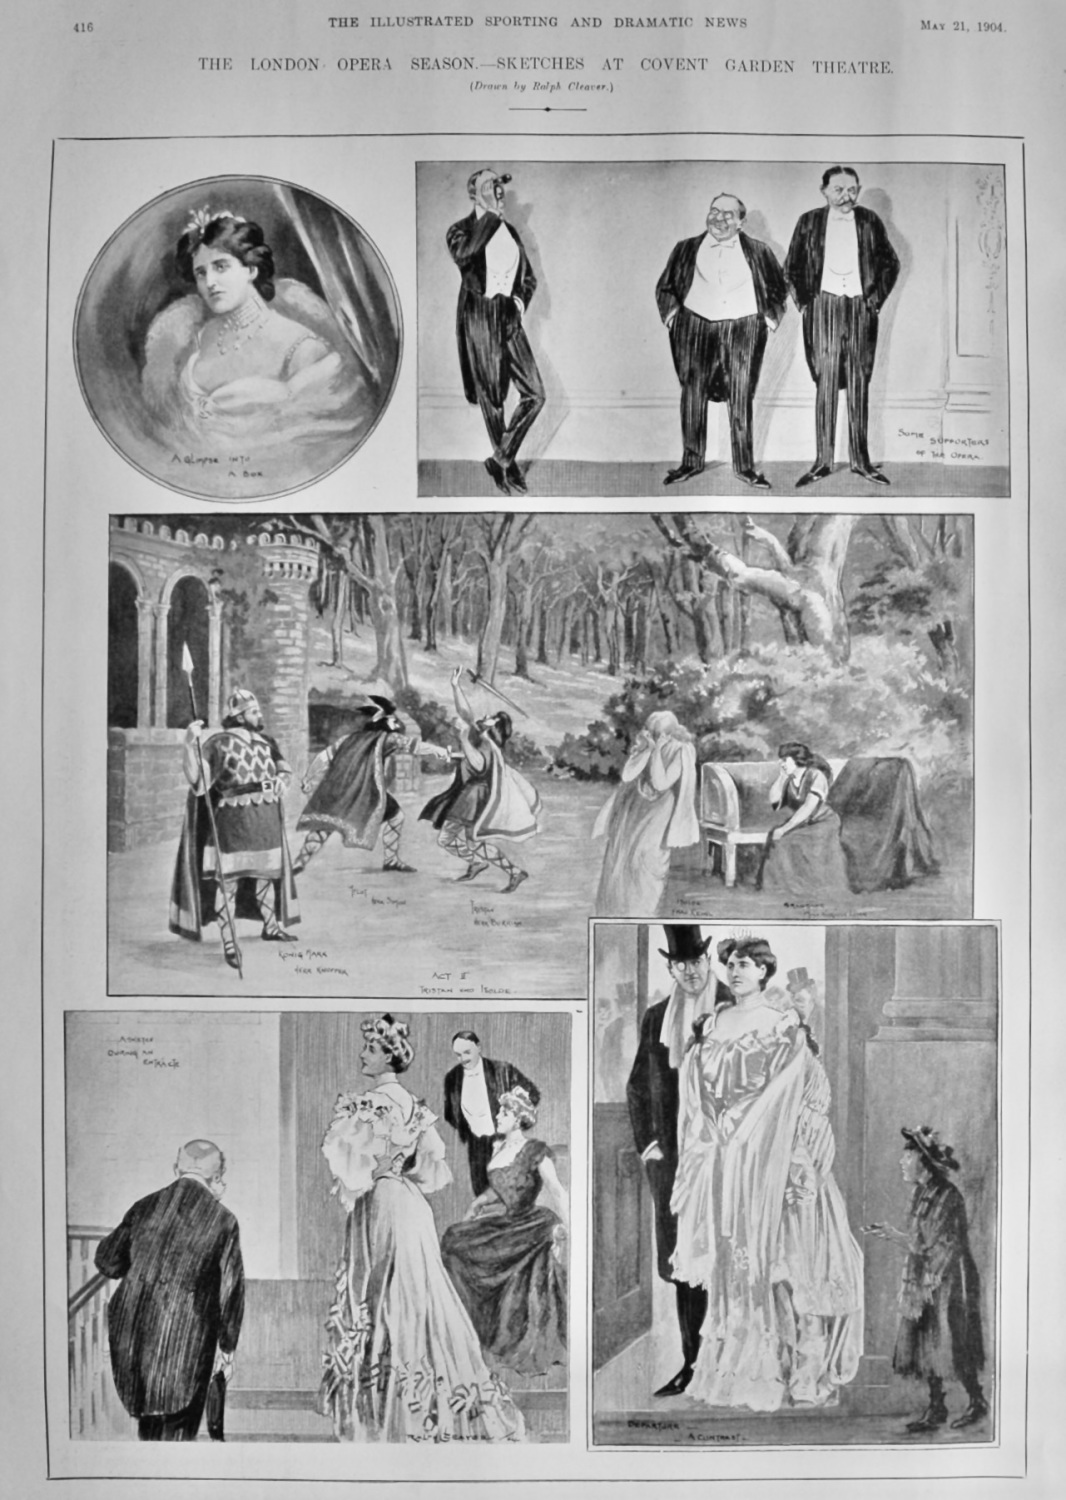 The London Opera Season.- Sketches at Covent Garden Theatre.  1904.